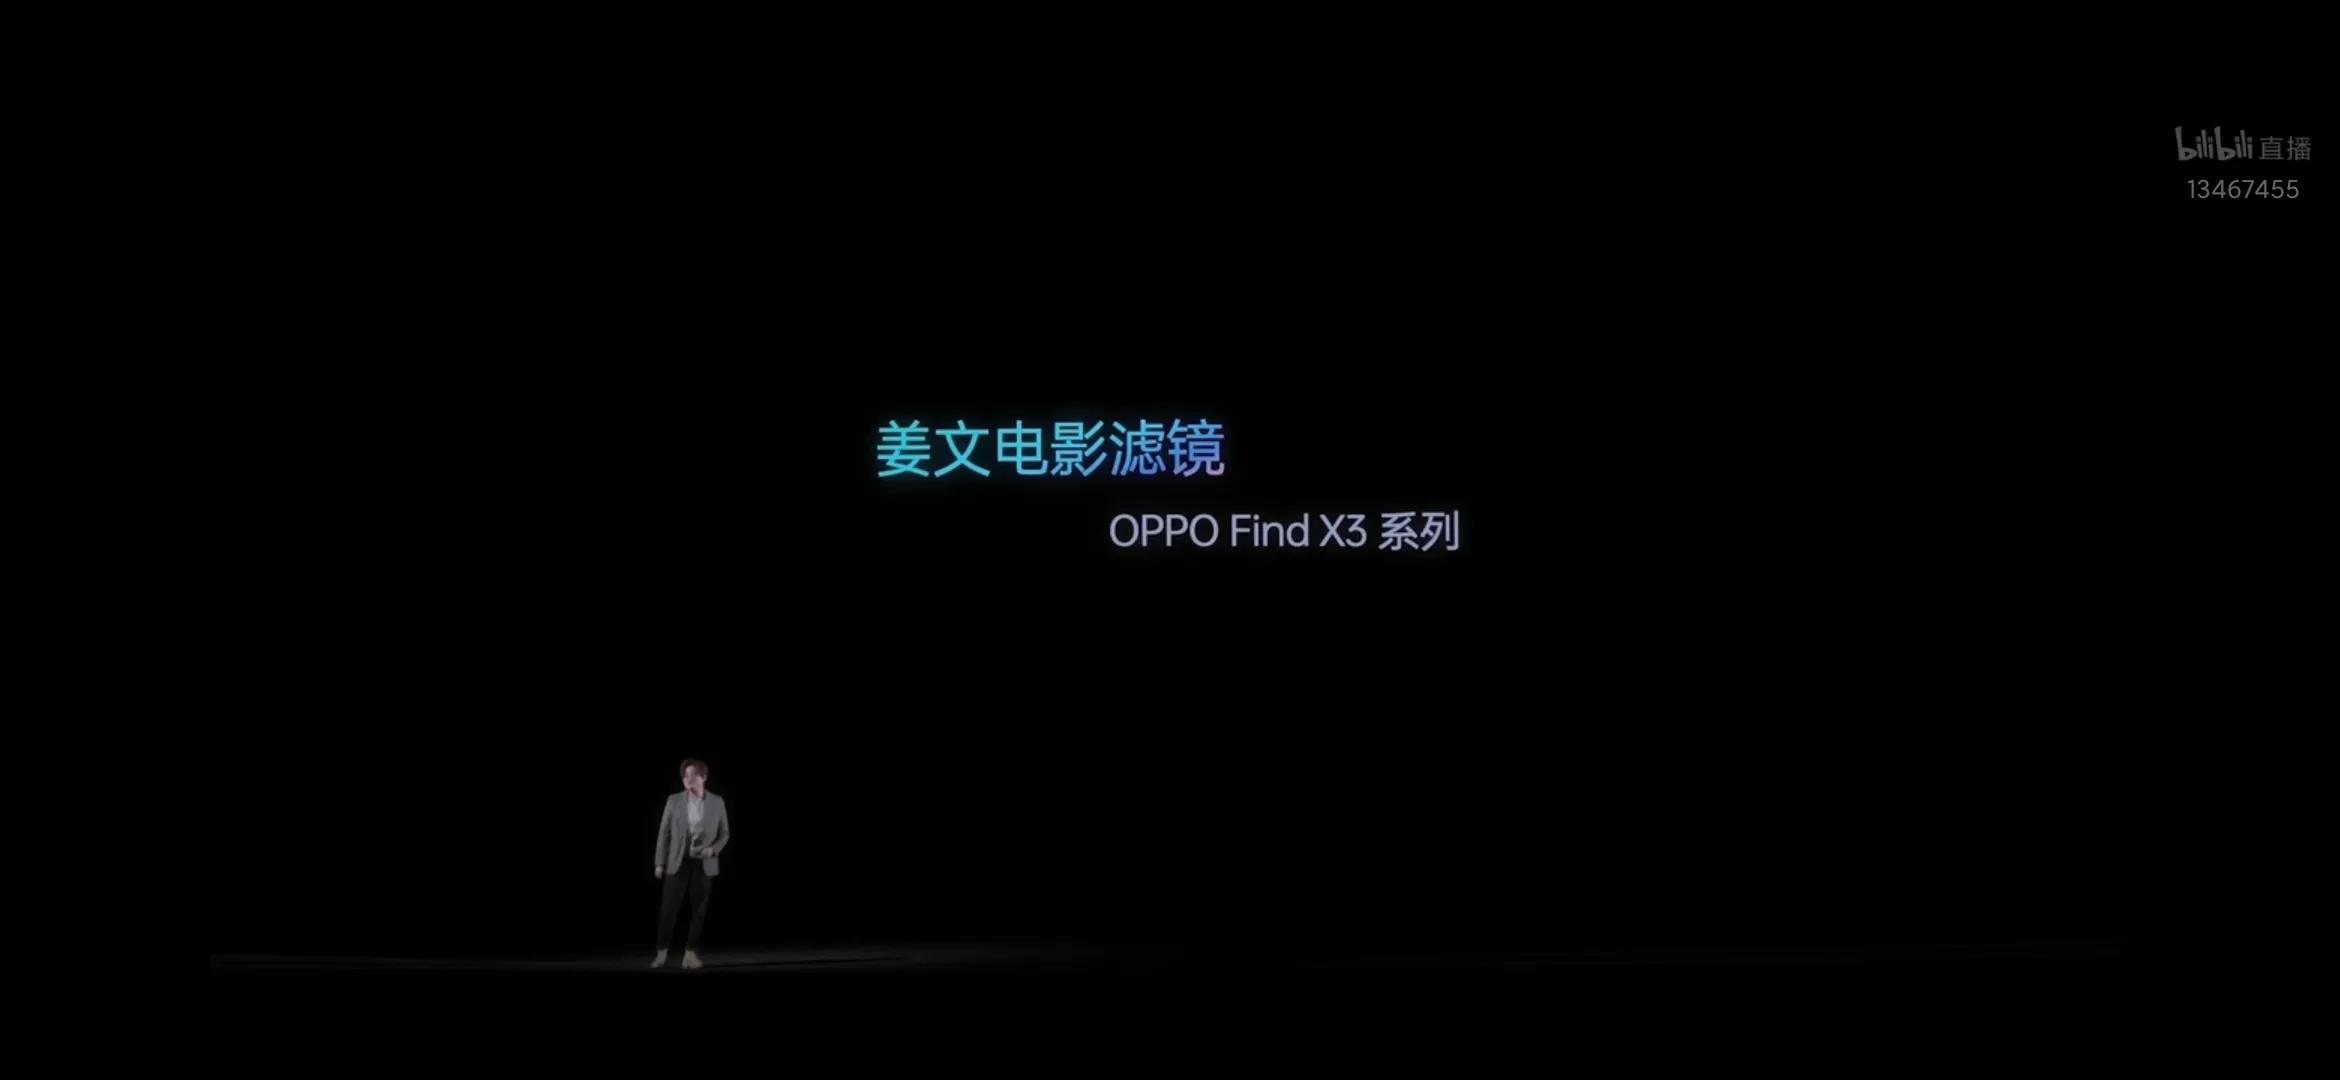 oppo findx3厉害了！联合姜文导演推出新滤镜！